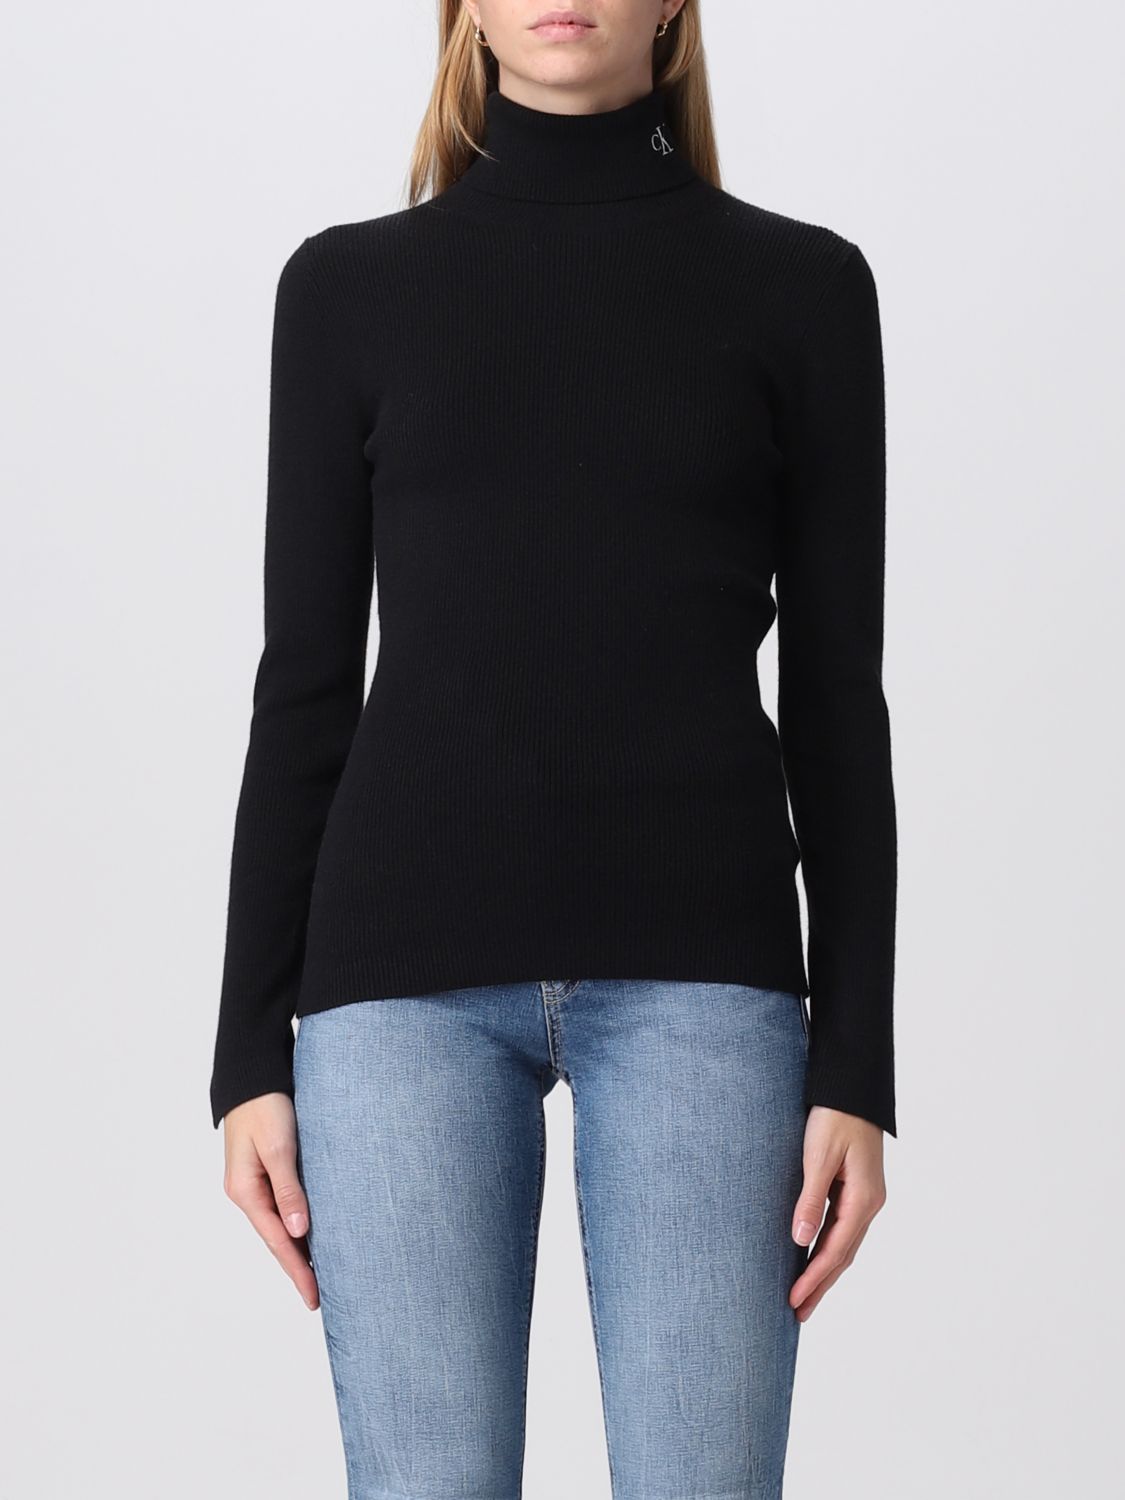 CALVIN KLEIN JEANS: women's sweater - Black | Calvin Klein Jeans sweater  J20J219779 online on 